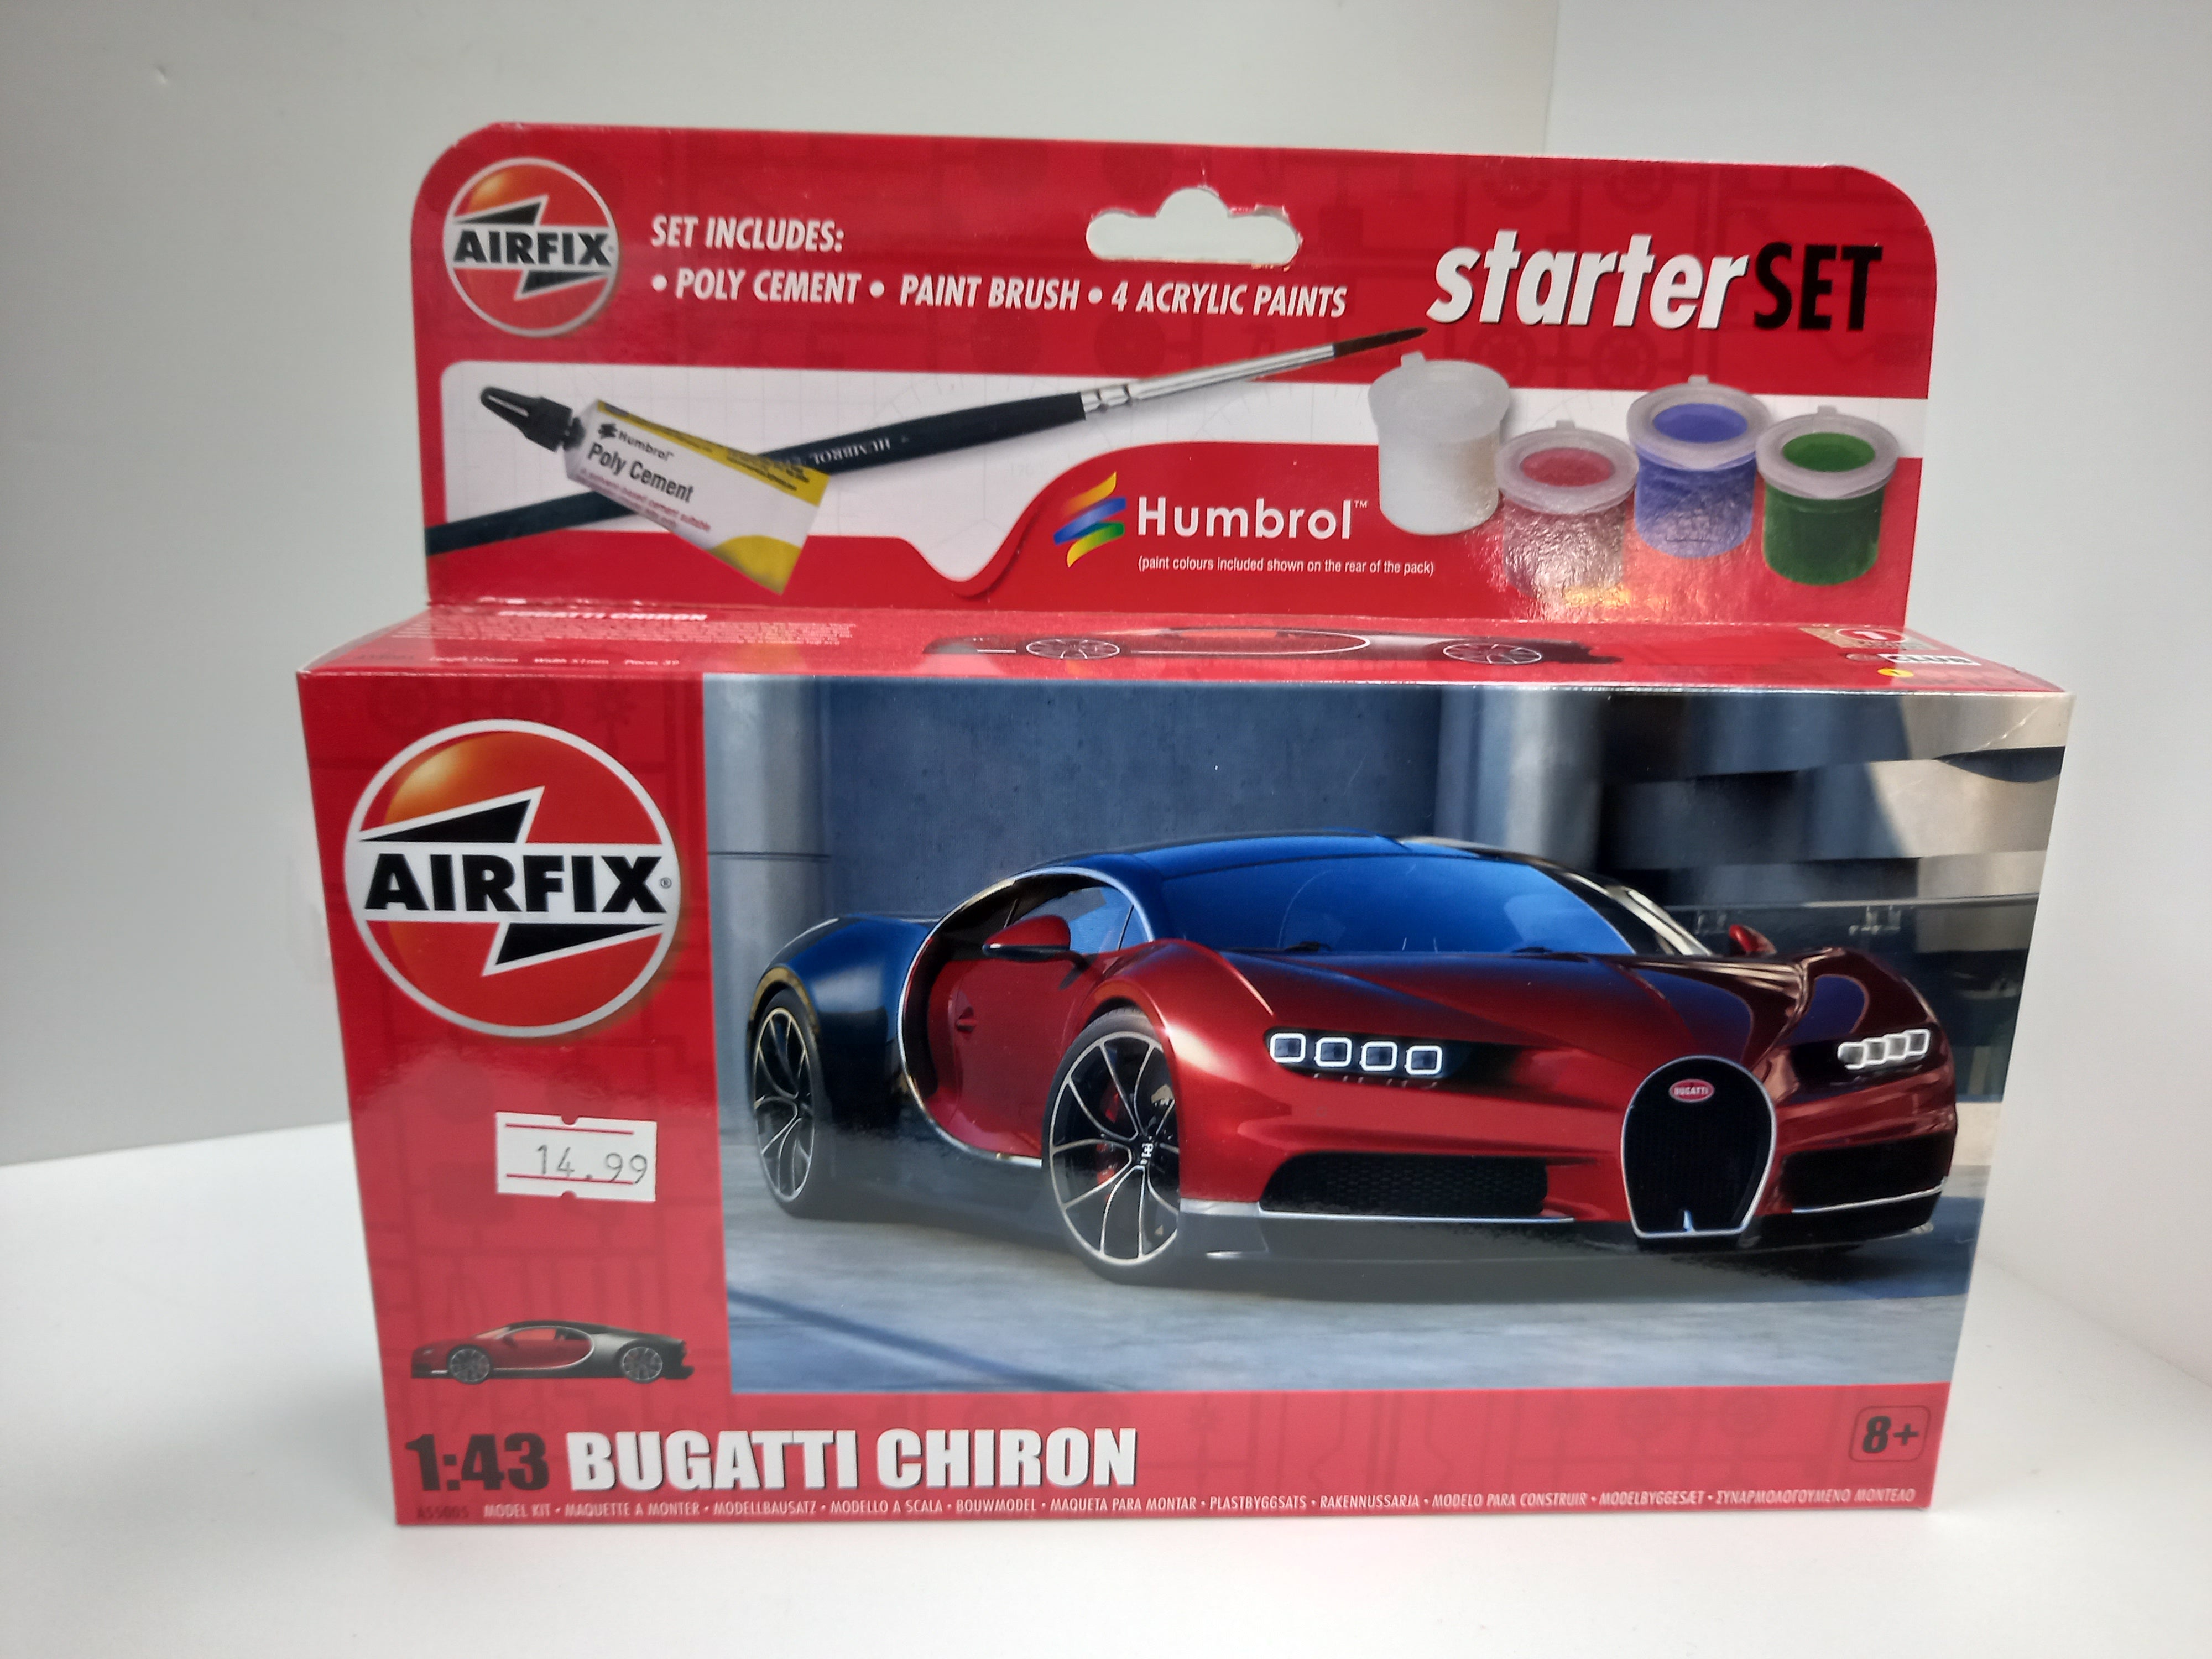 Airfix Bugatti Chiron Starter Set 1:43 Scale A55005